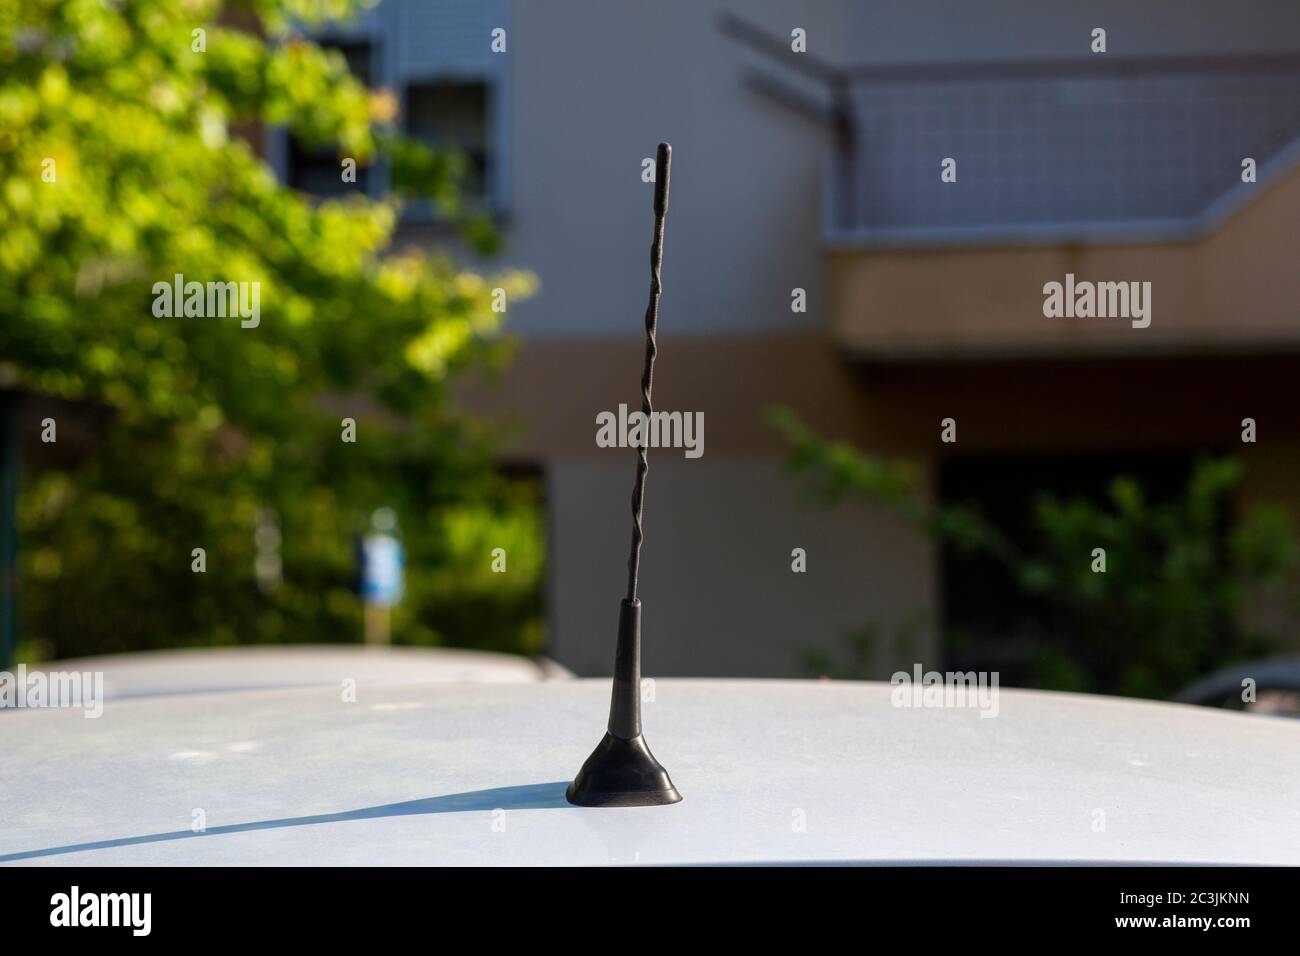 Car radio FM antenna Stock Photo - Alamy